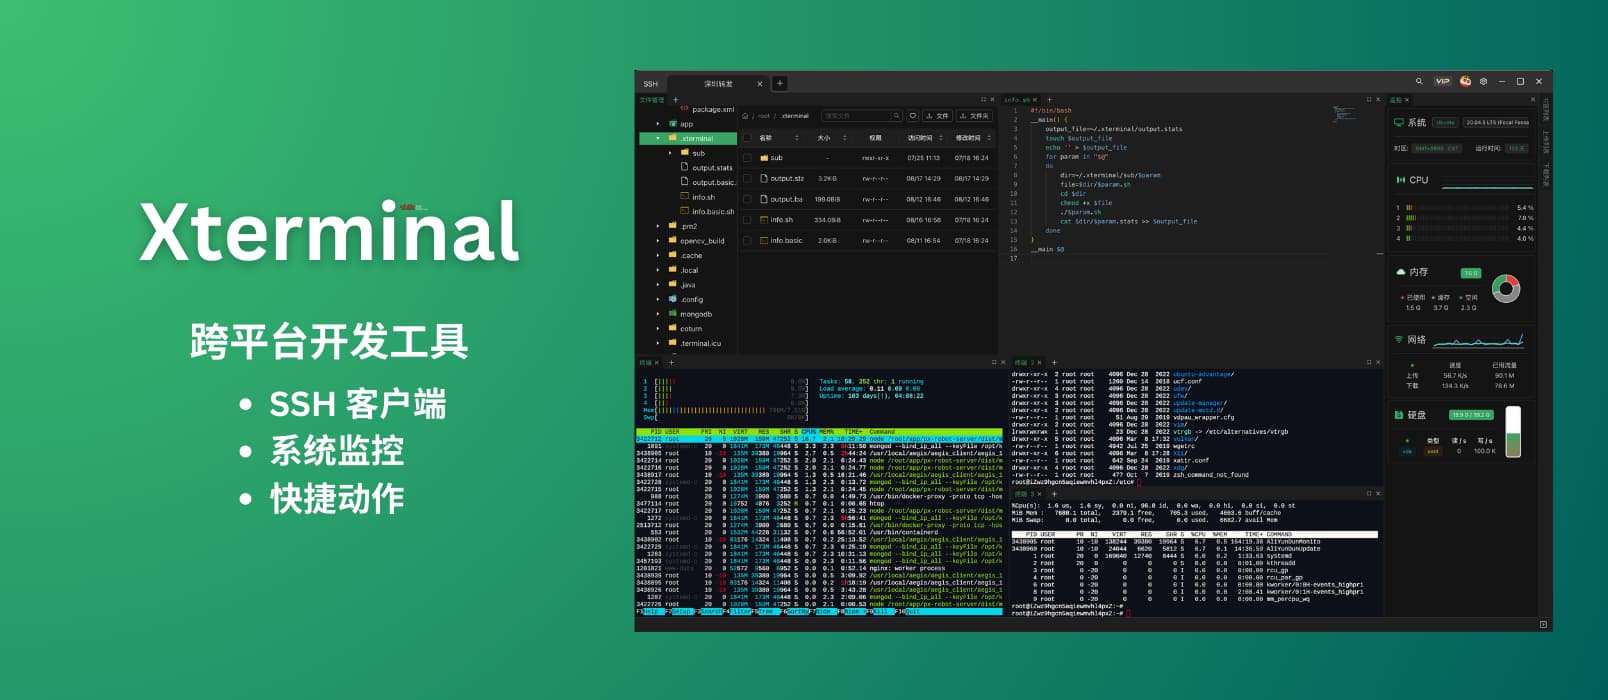 Xterminal – 跨平台开发工具：SSH 客户端，不止是终端，还支持 CPU、内存、网络监控，快捷动作等